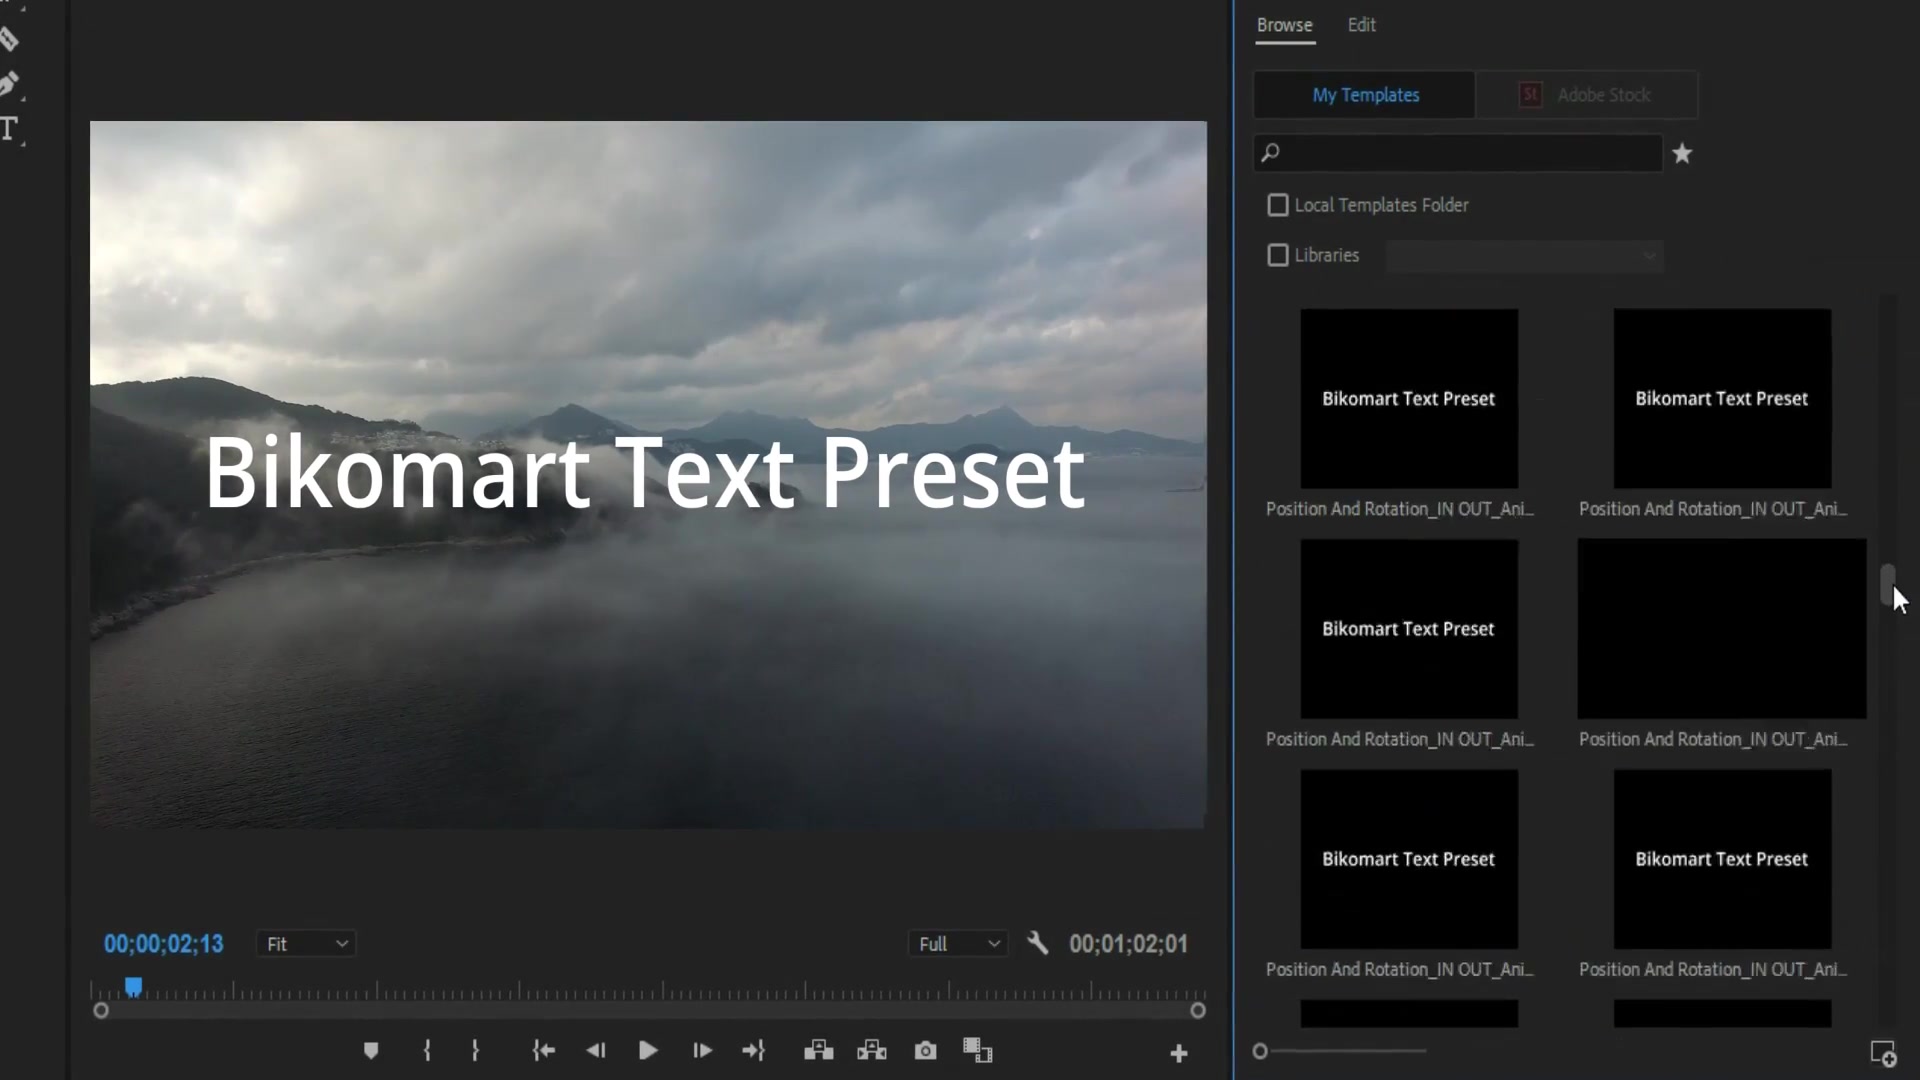 premiere pro glitch text effect